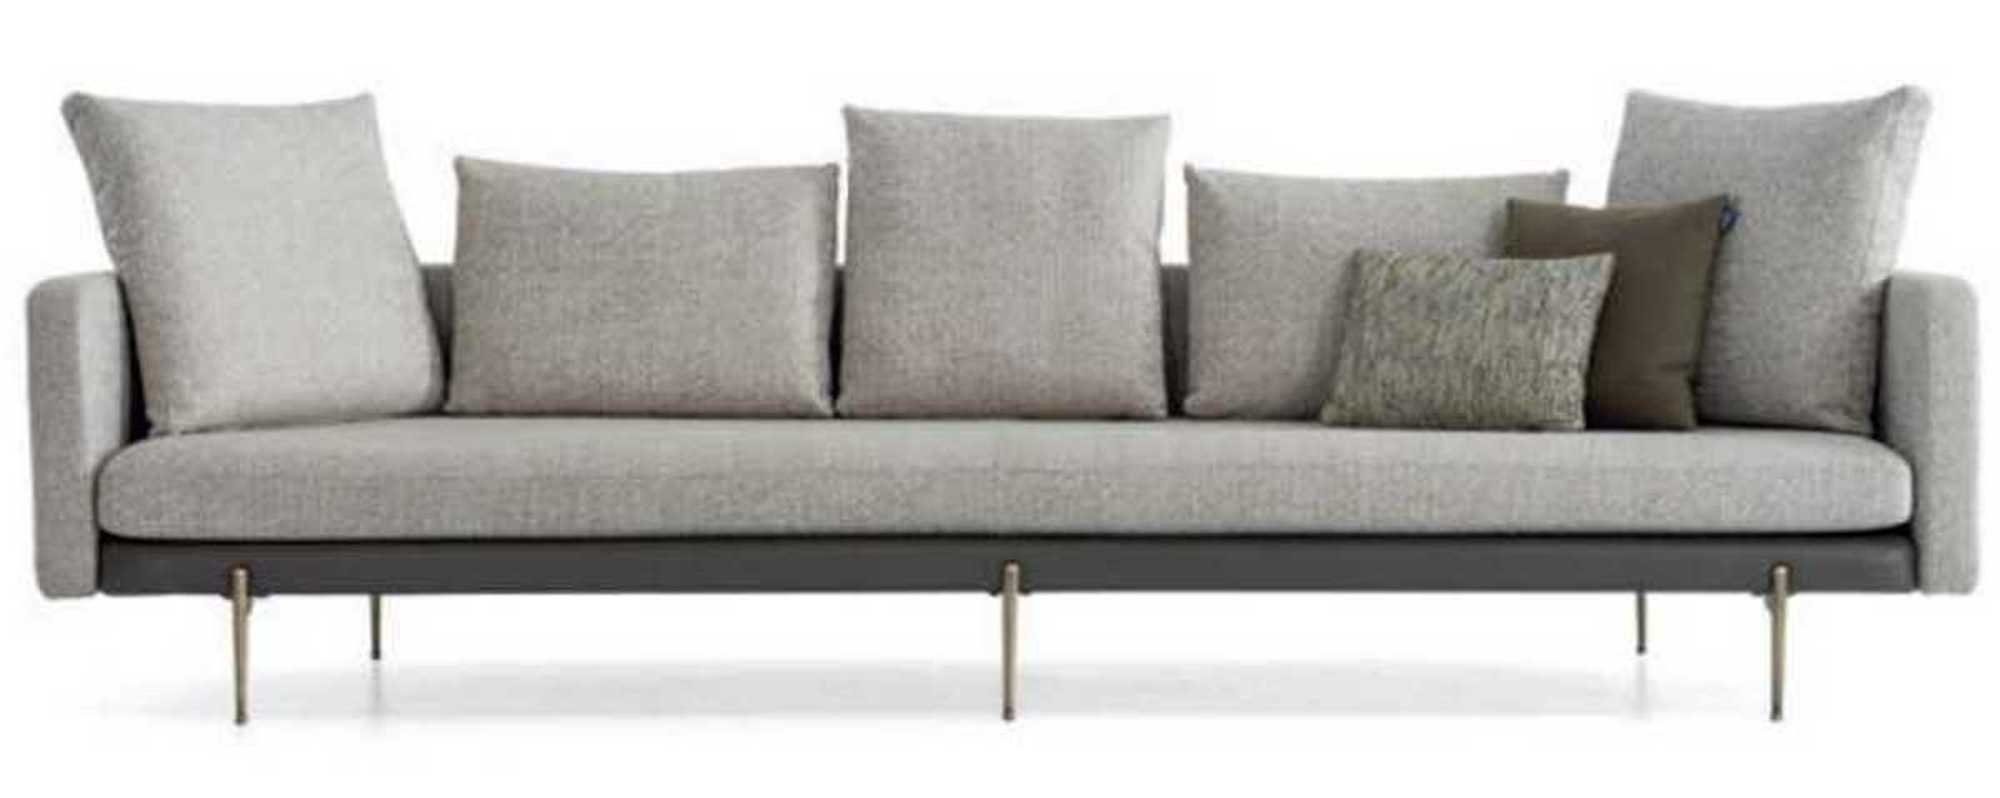 JVmoebel Sofa Luxus Sofa Grau Farbe Wohnzimmer Polster Textil 5 sitzer, 1 Teile, Made in Europa | Alle Sofas